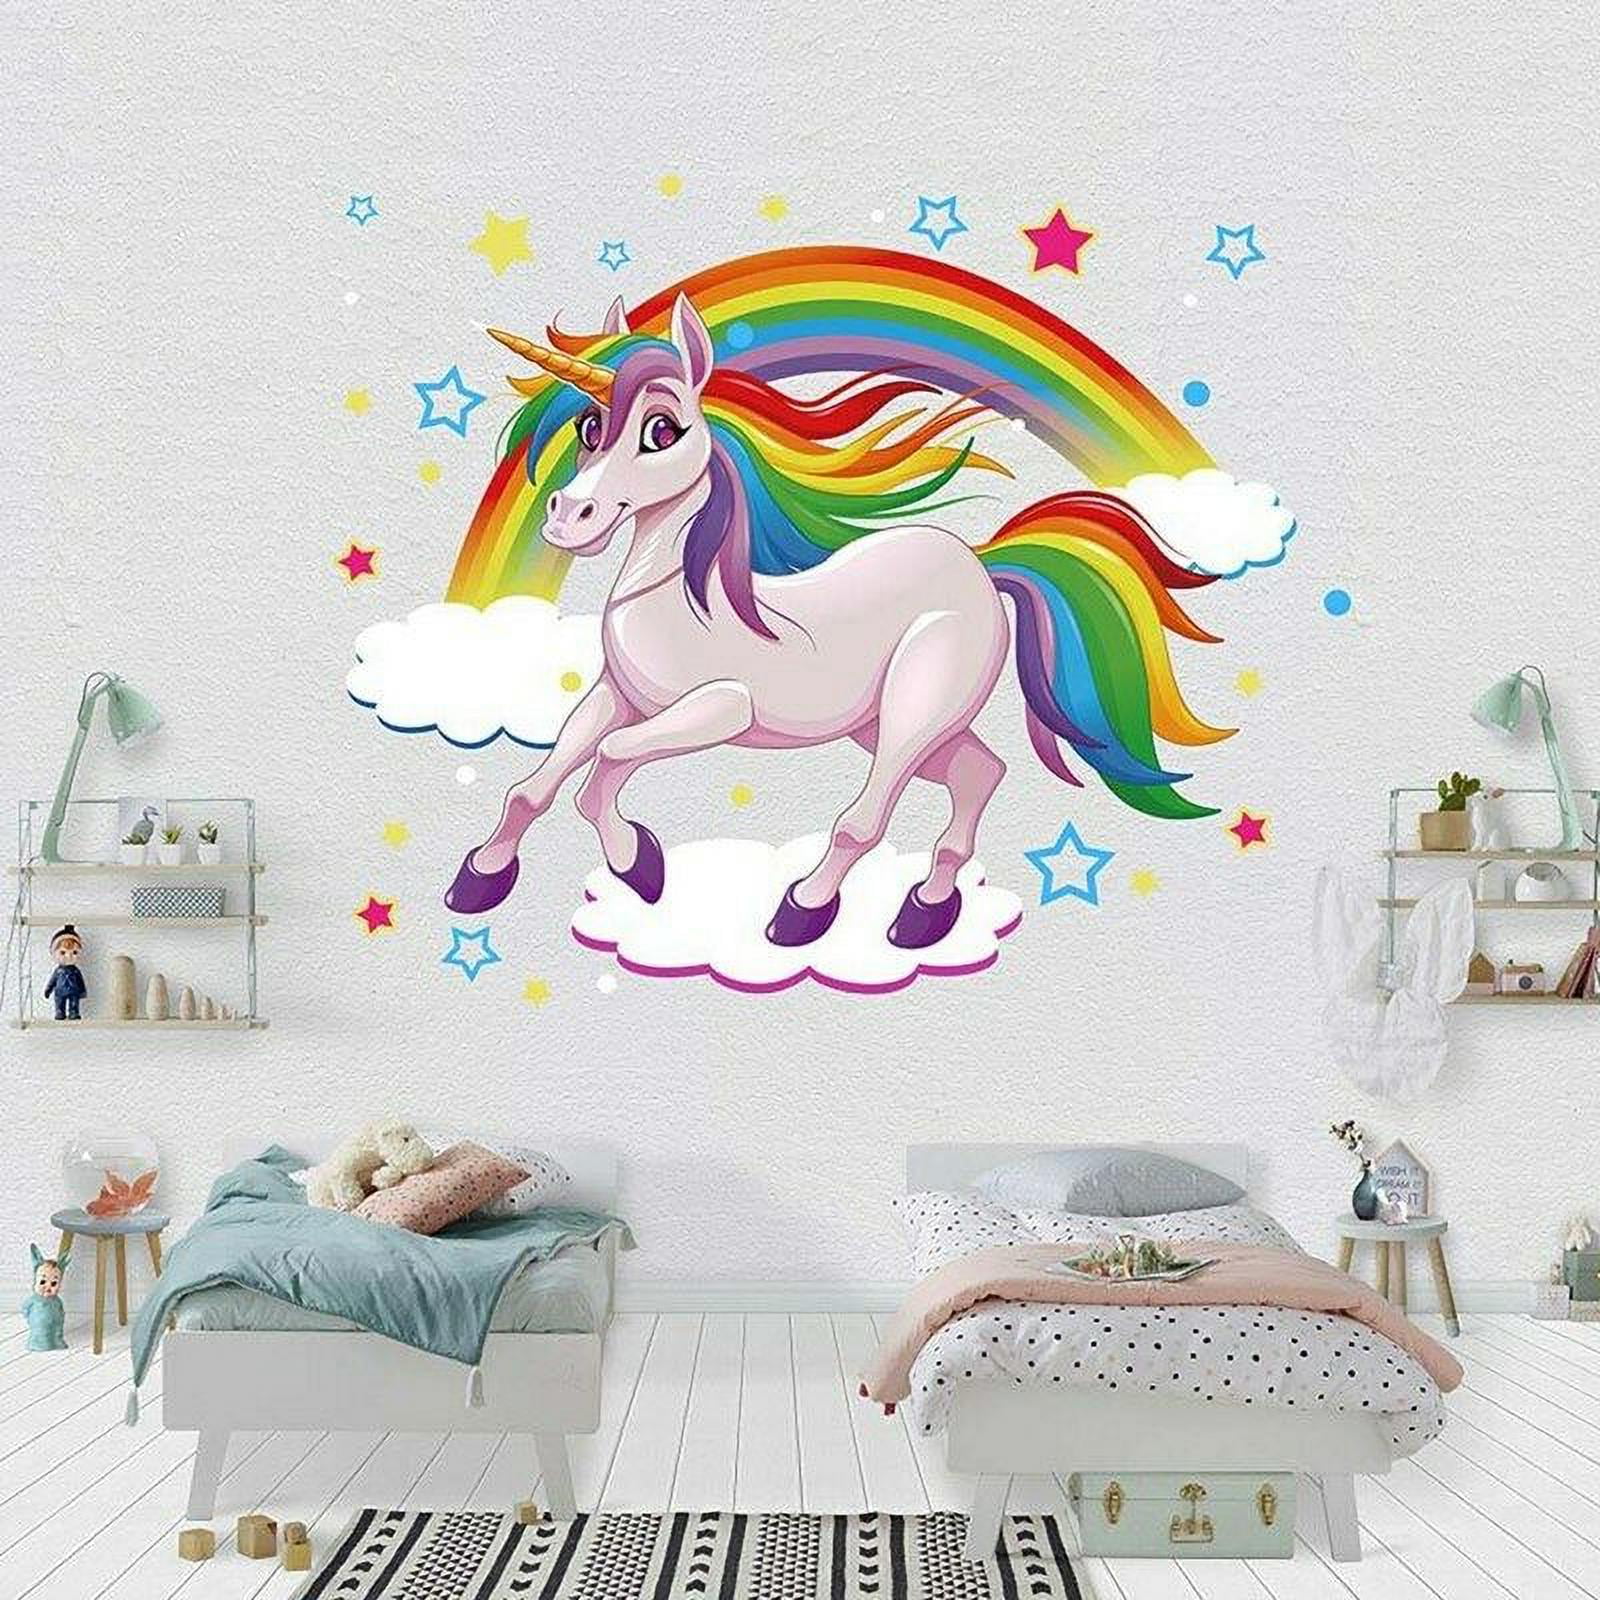 5 Magic Rainbow Unicorns Wall Stickers Decals Bedroom Fairy Fun Stars Animals